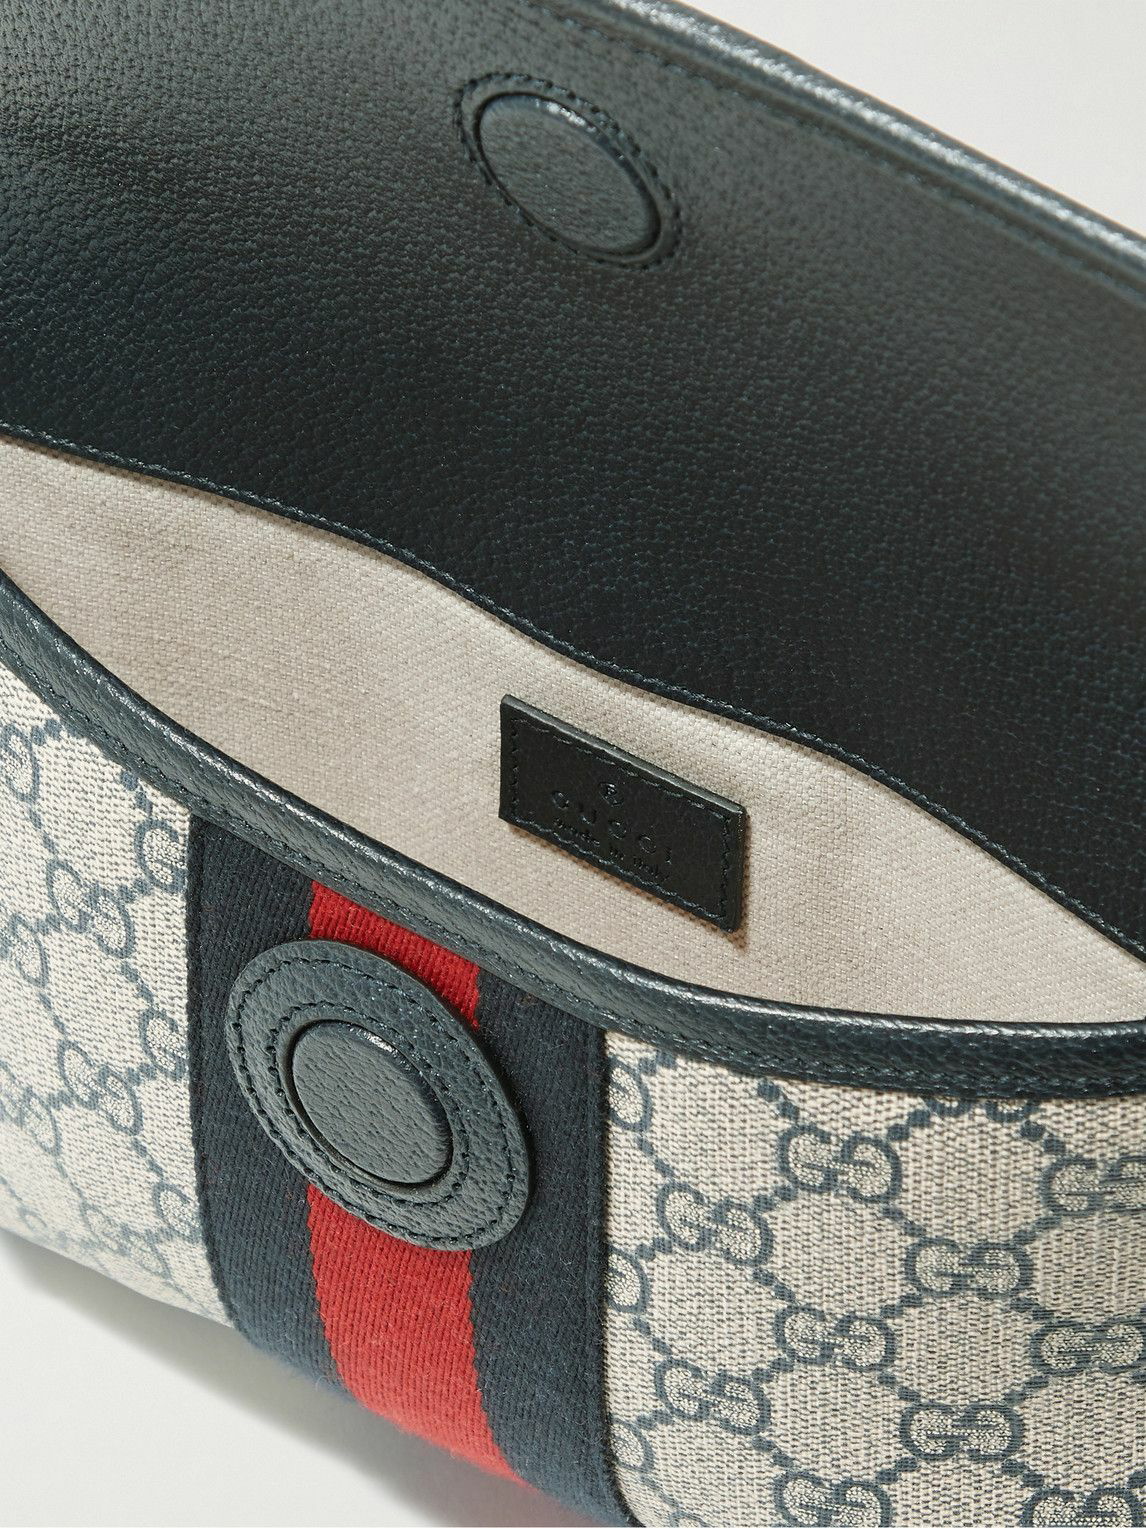 GUCCI Ophidia Leather-Trimmed Monogrammed Coated-Canvas Belt Bag